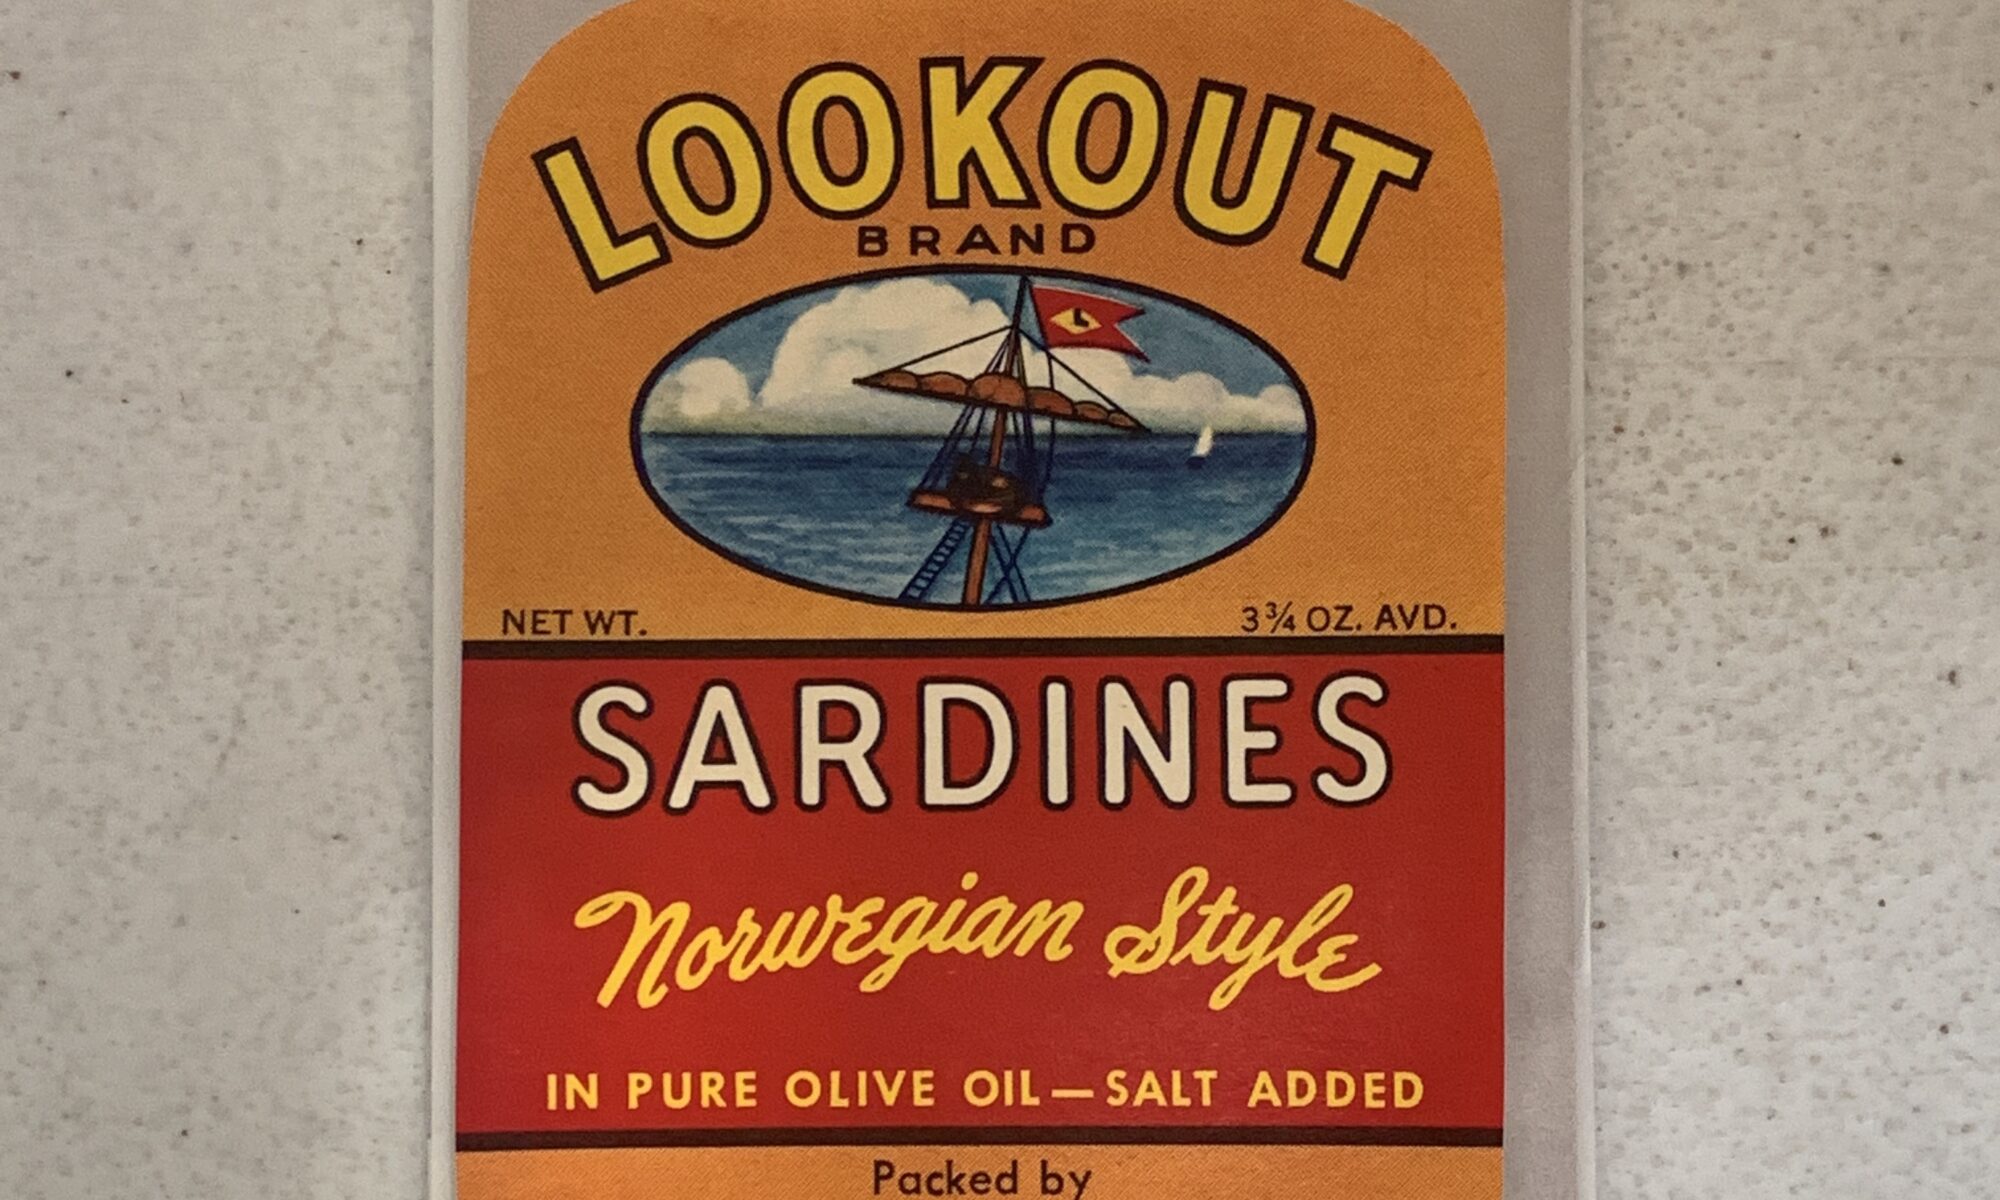 Image of a Vintage Sardine Label - Lookout